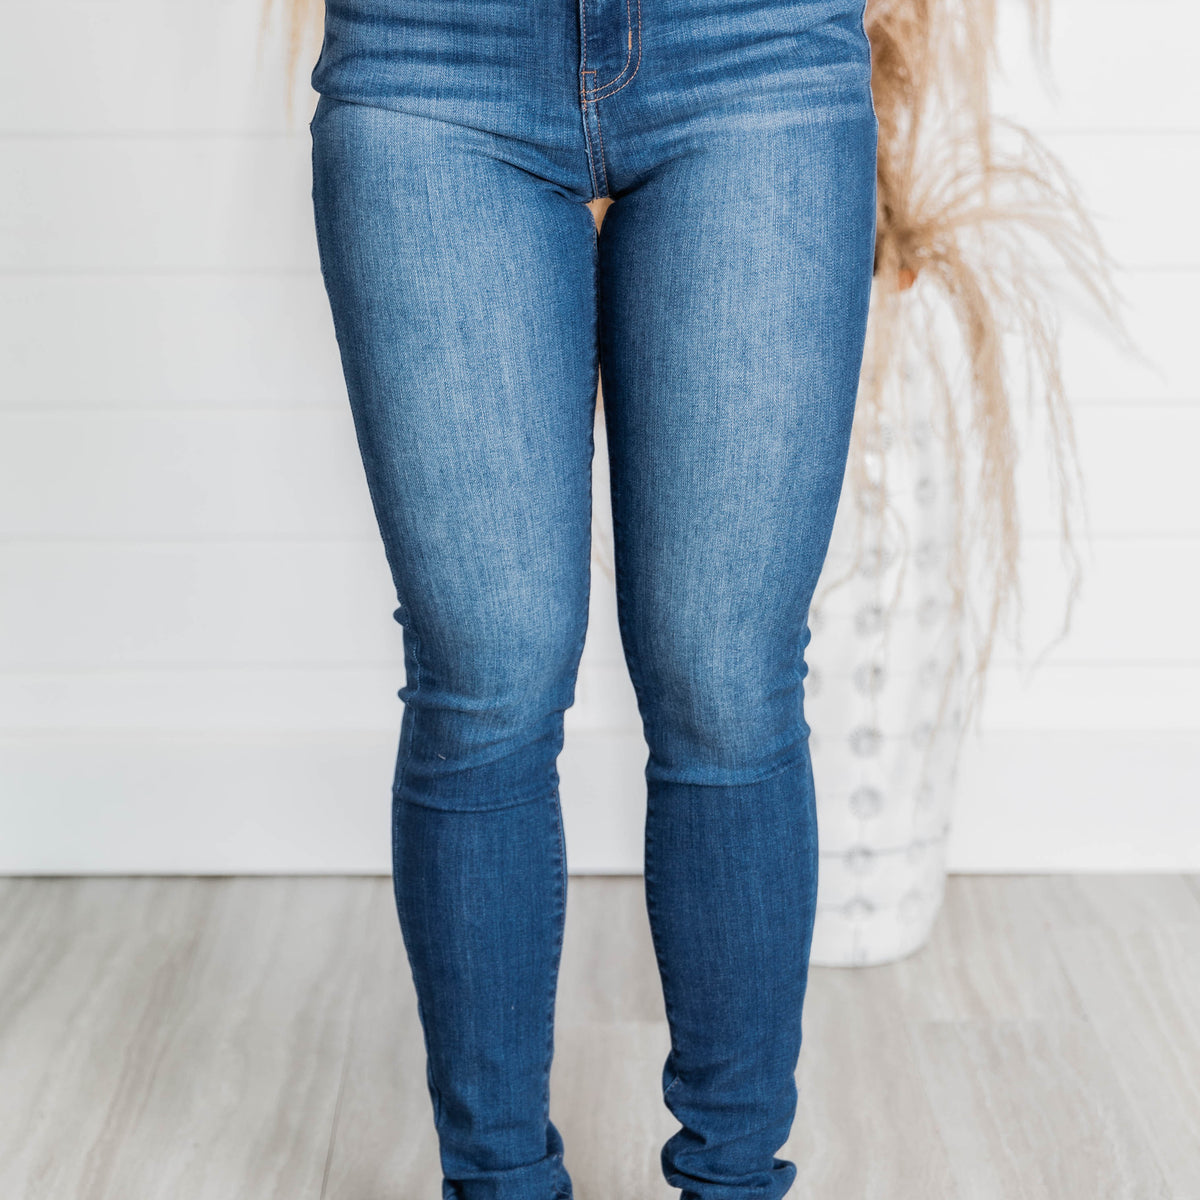 Womens Hannah High Rise Jeans in Dark Denim Size 3 by Fashion Nova